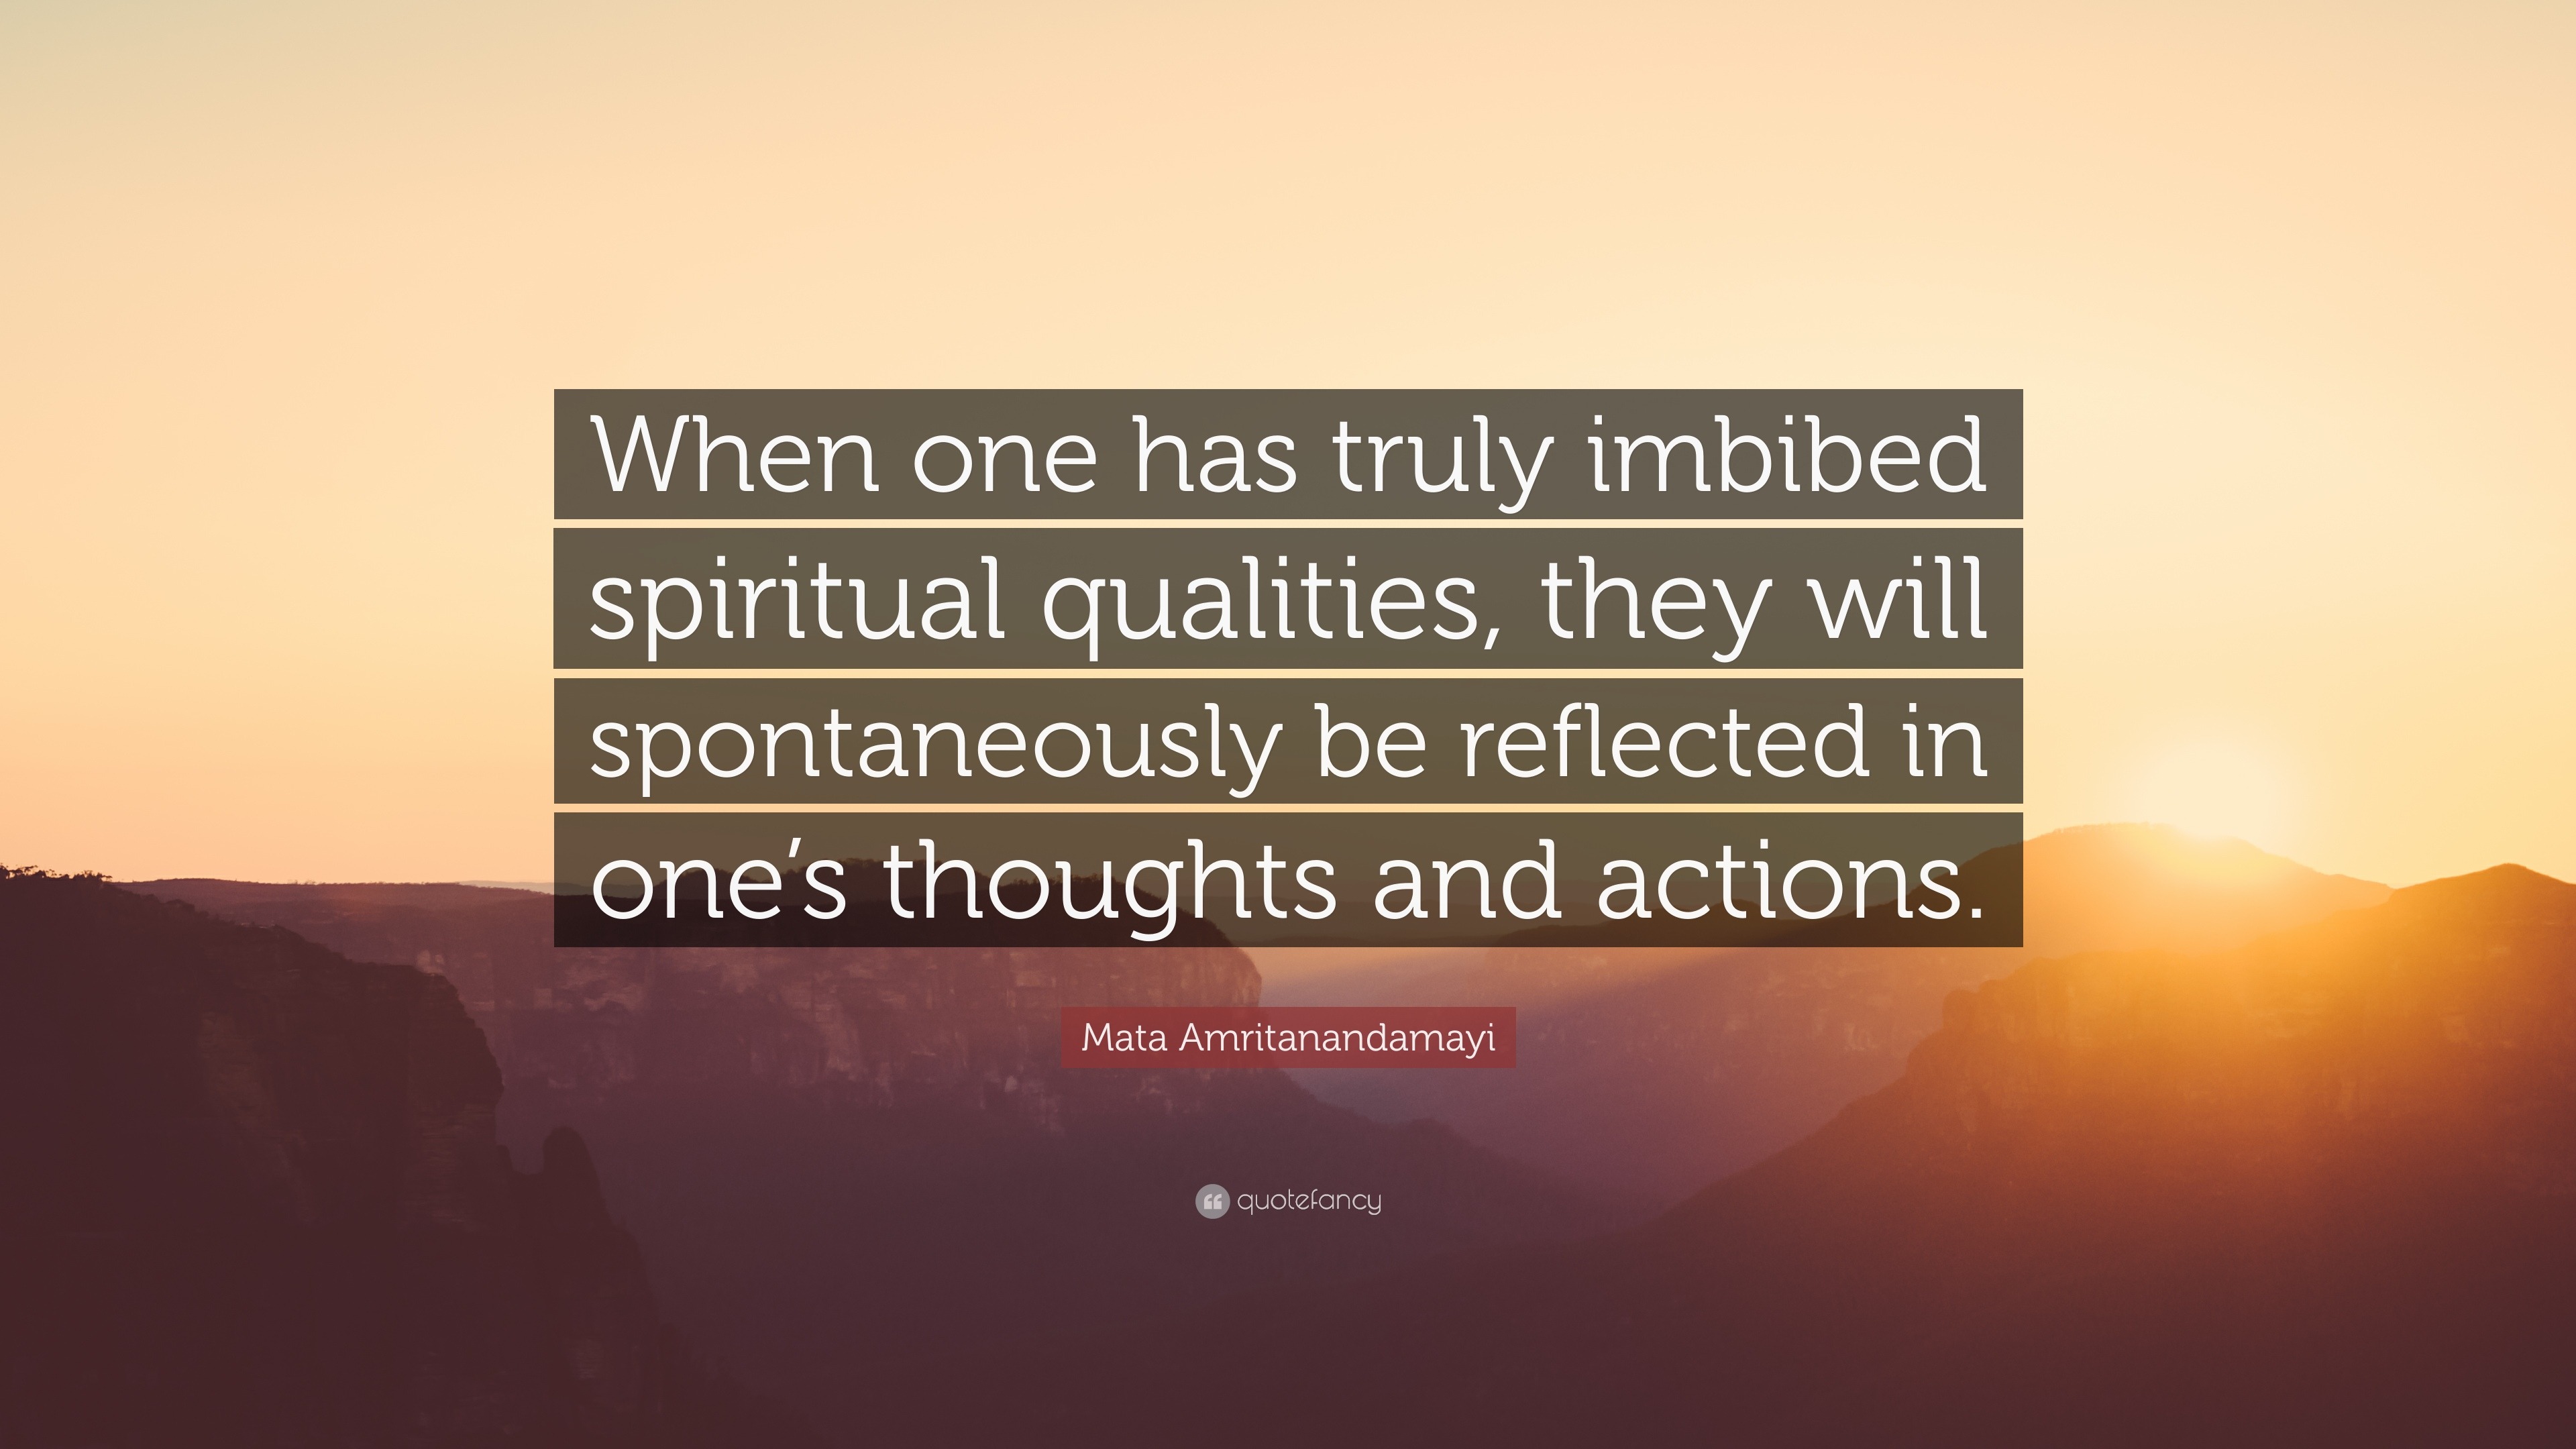 Mata Amritanandamayi Quote: “When one has truly imbibed spiritual ...